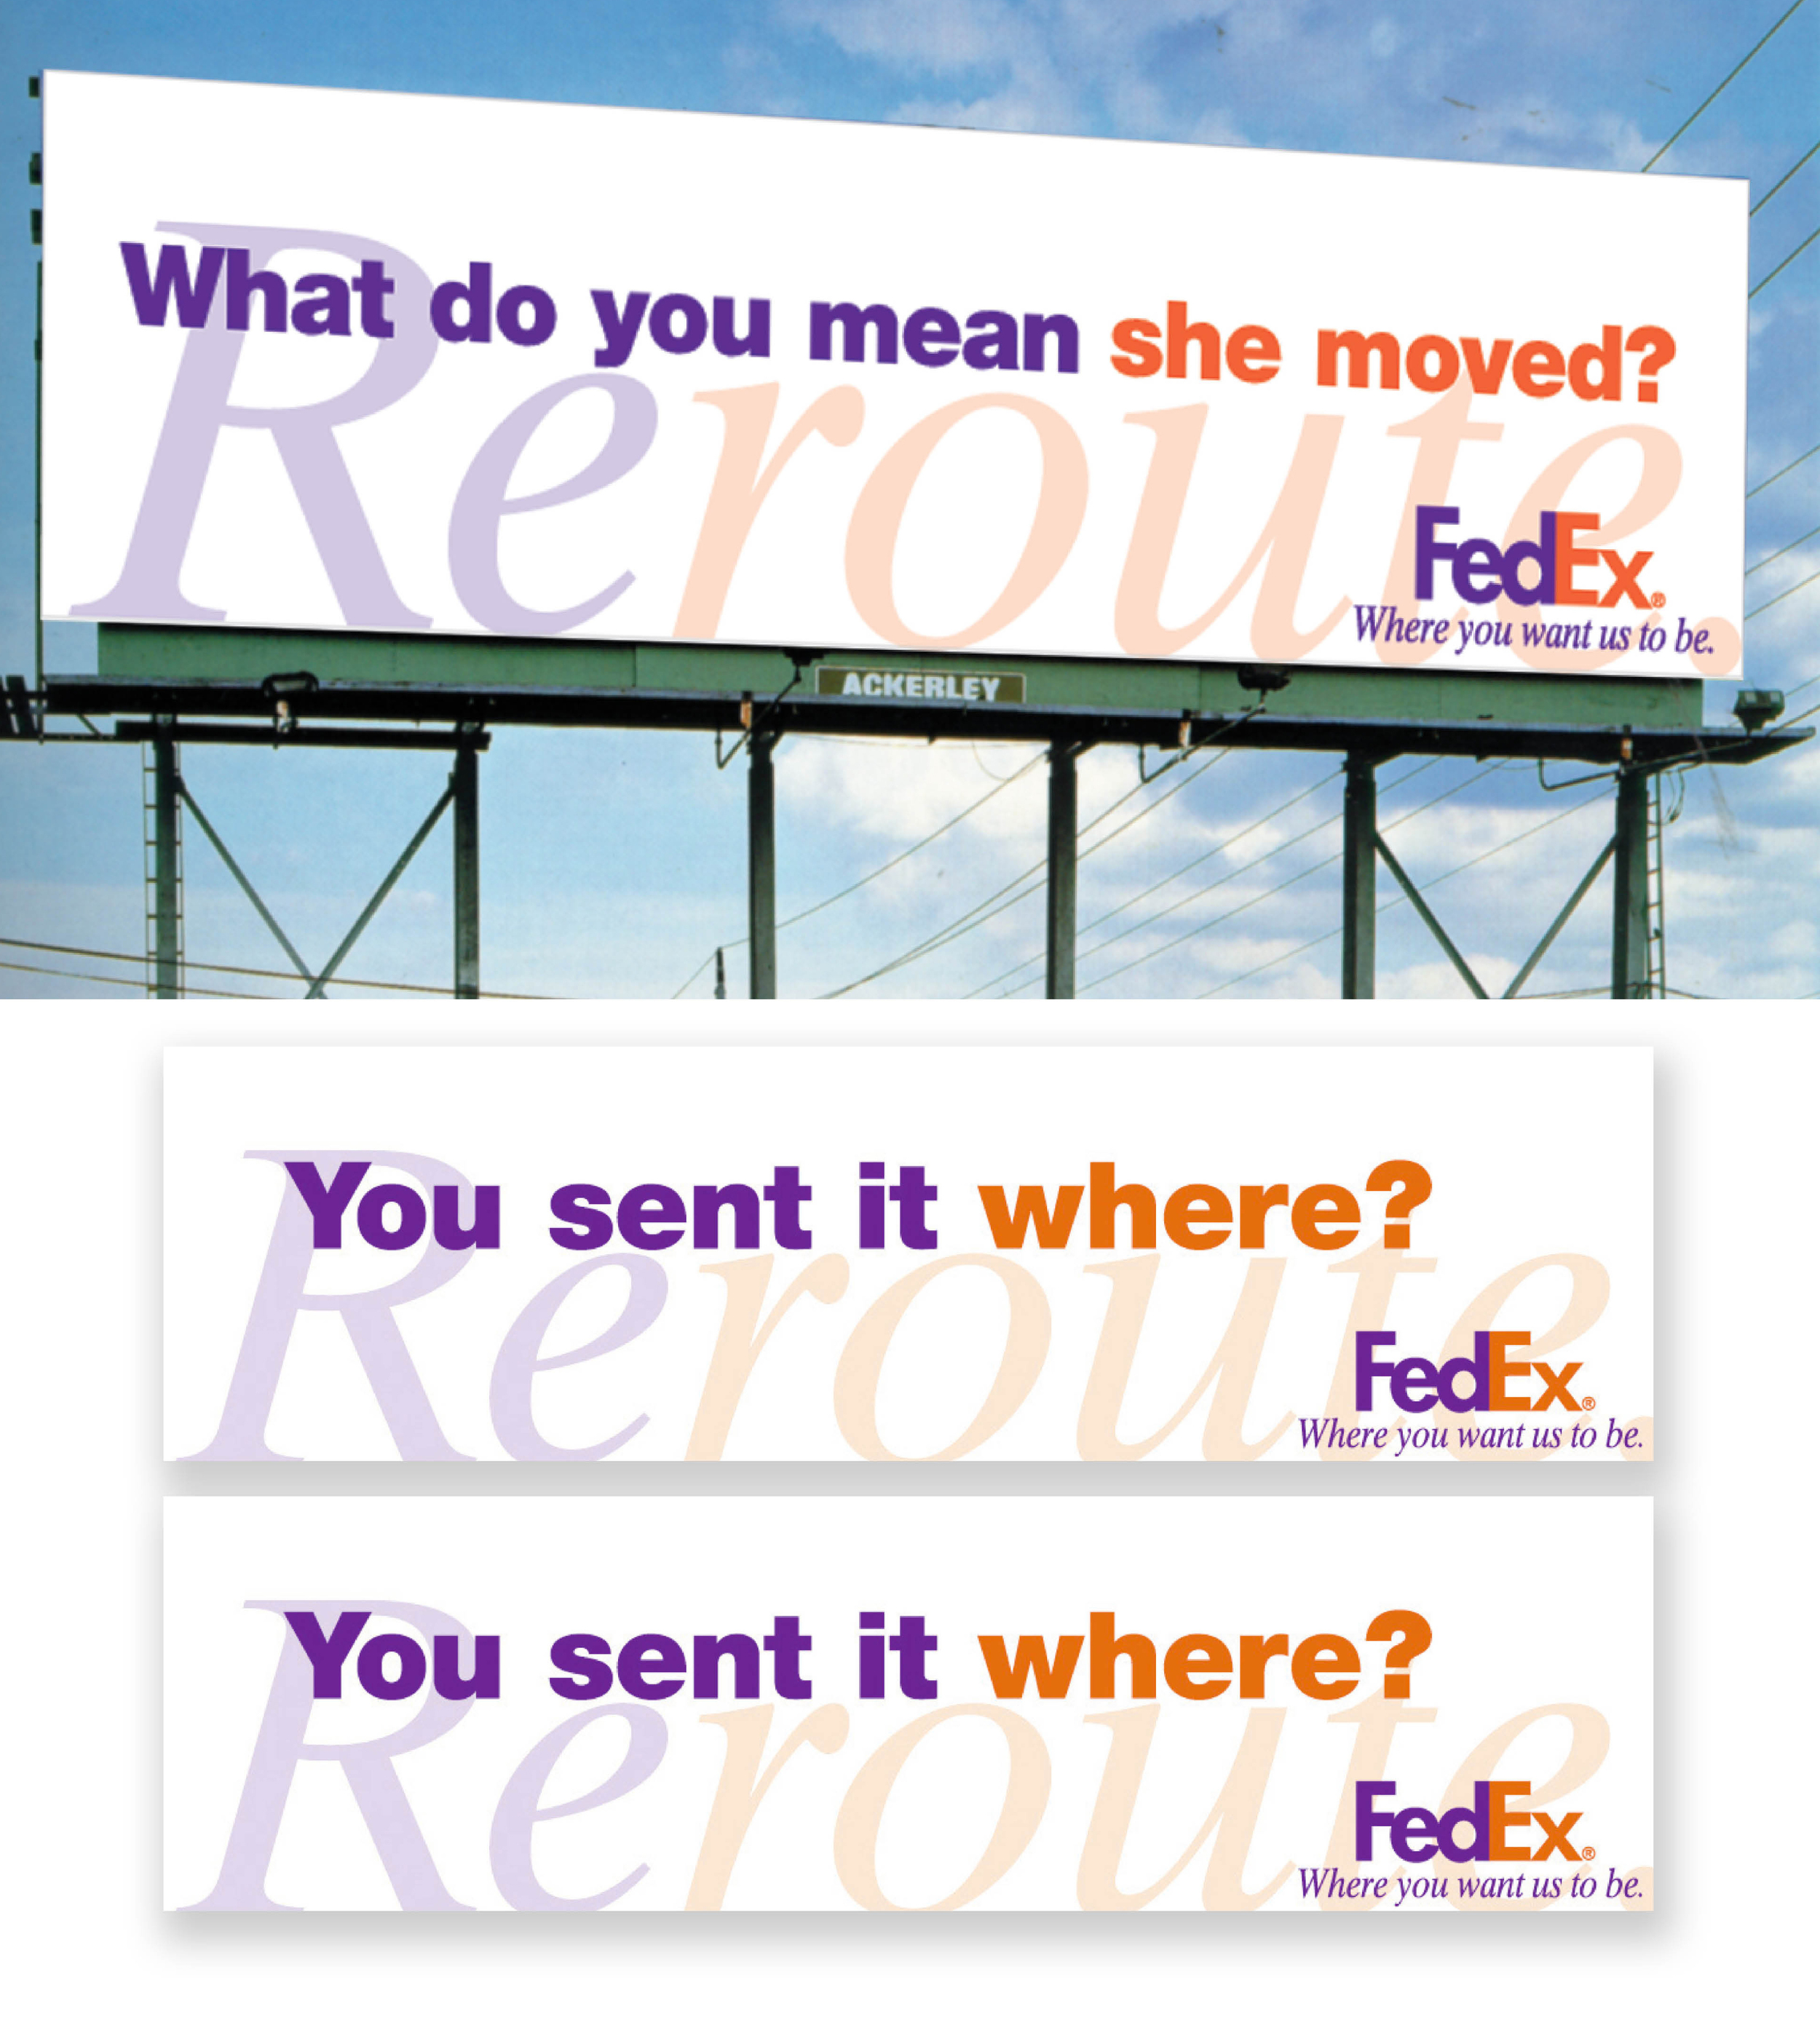 FEDEX | Reroute campaign outdoor